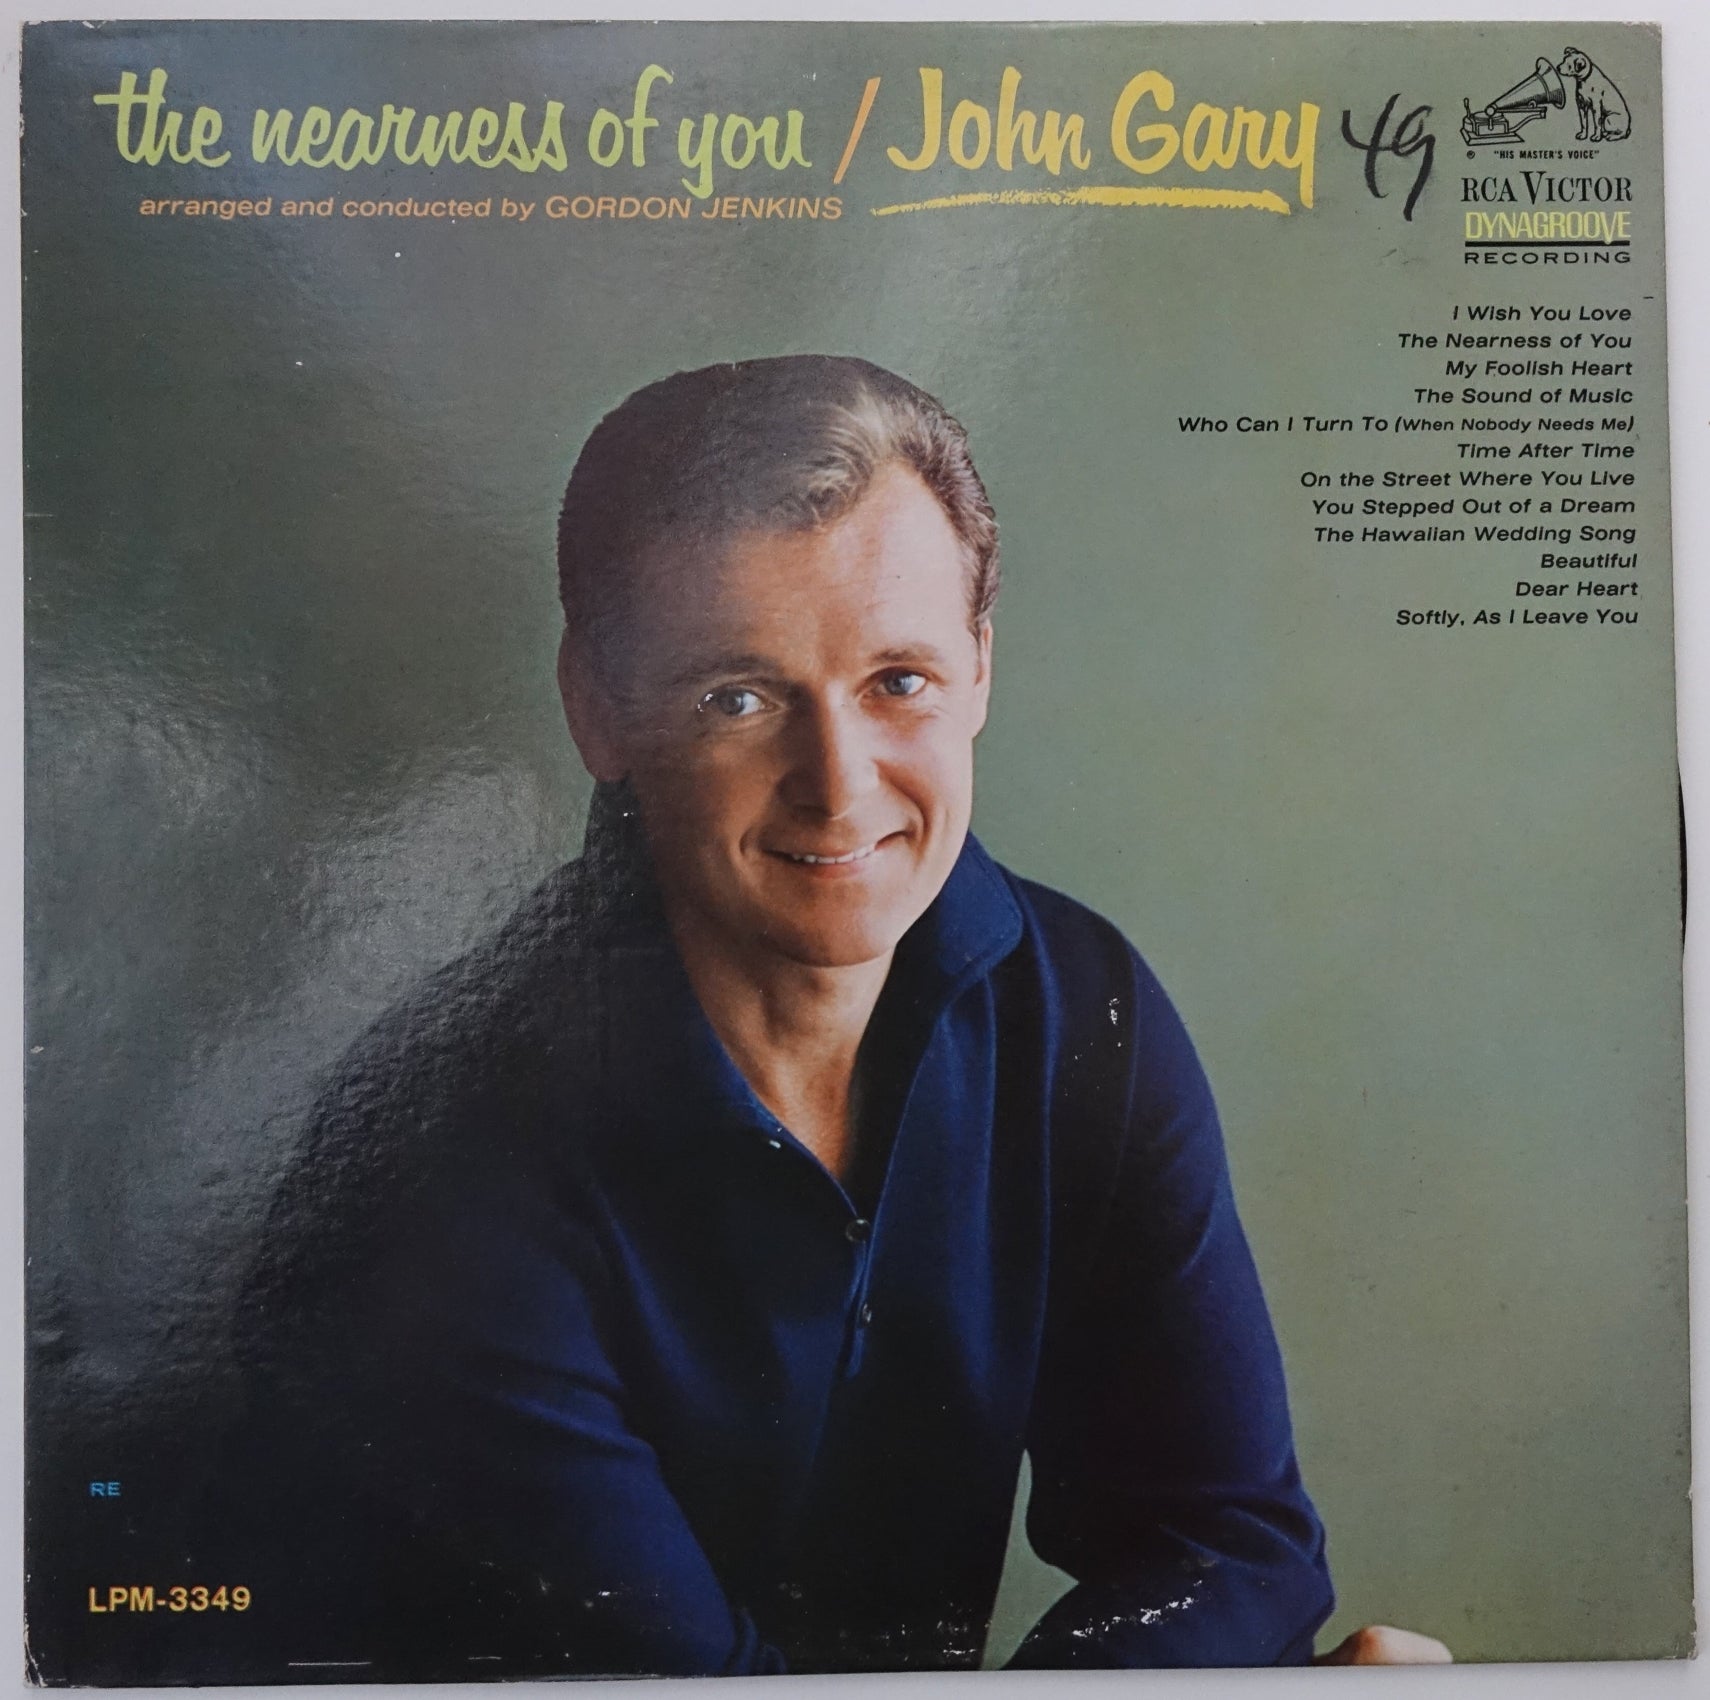 RCA013: John Gary - the Nearness of You